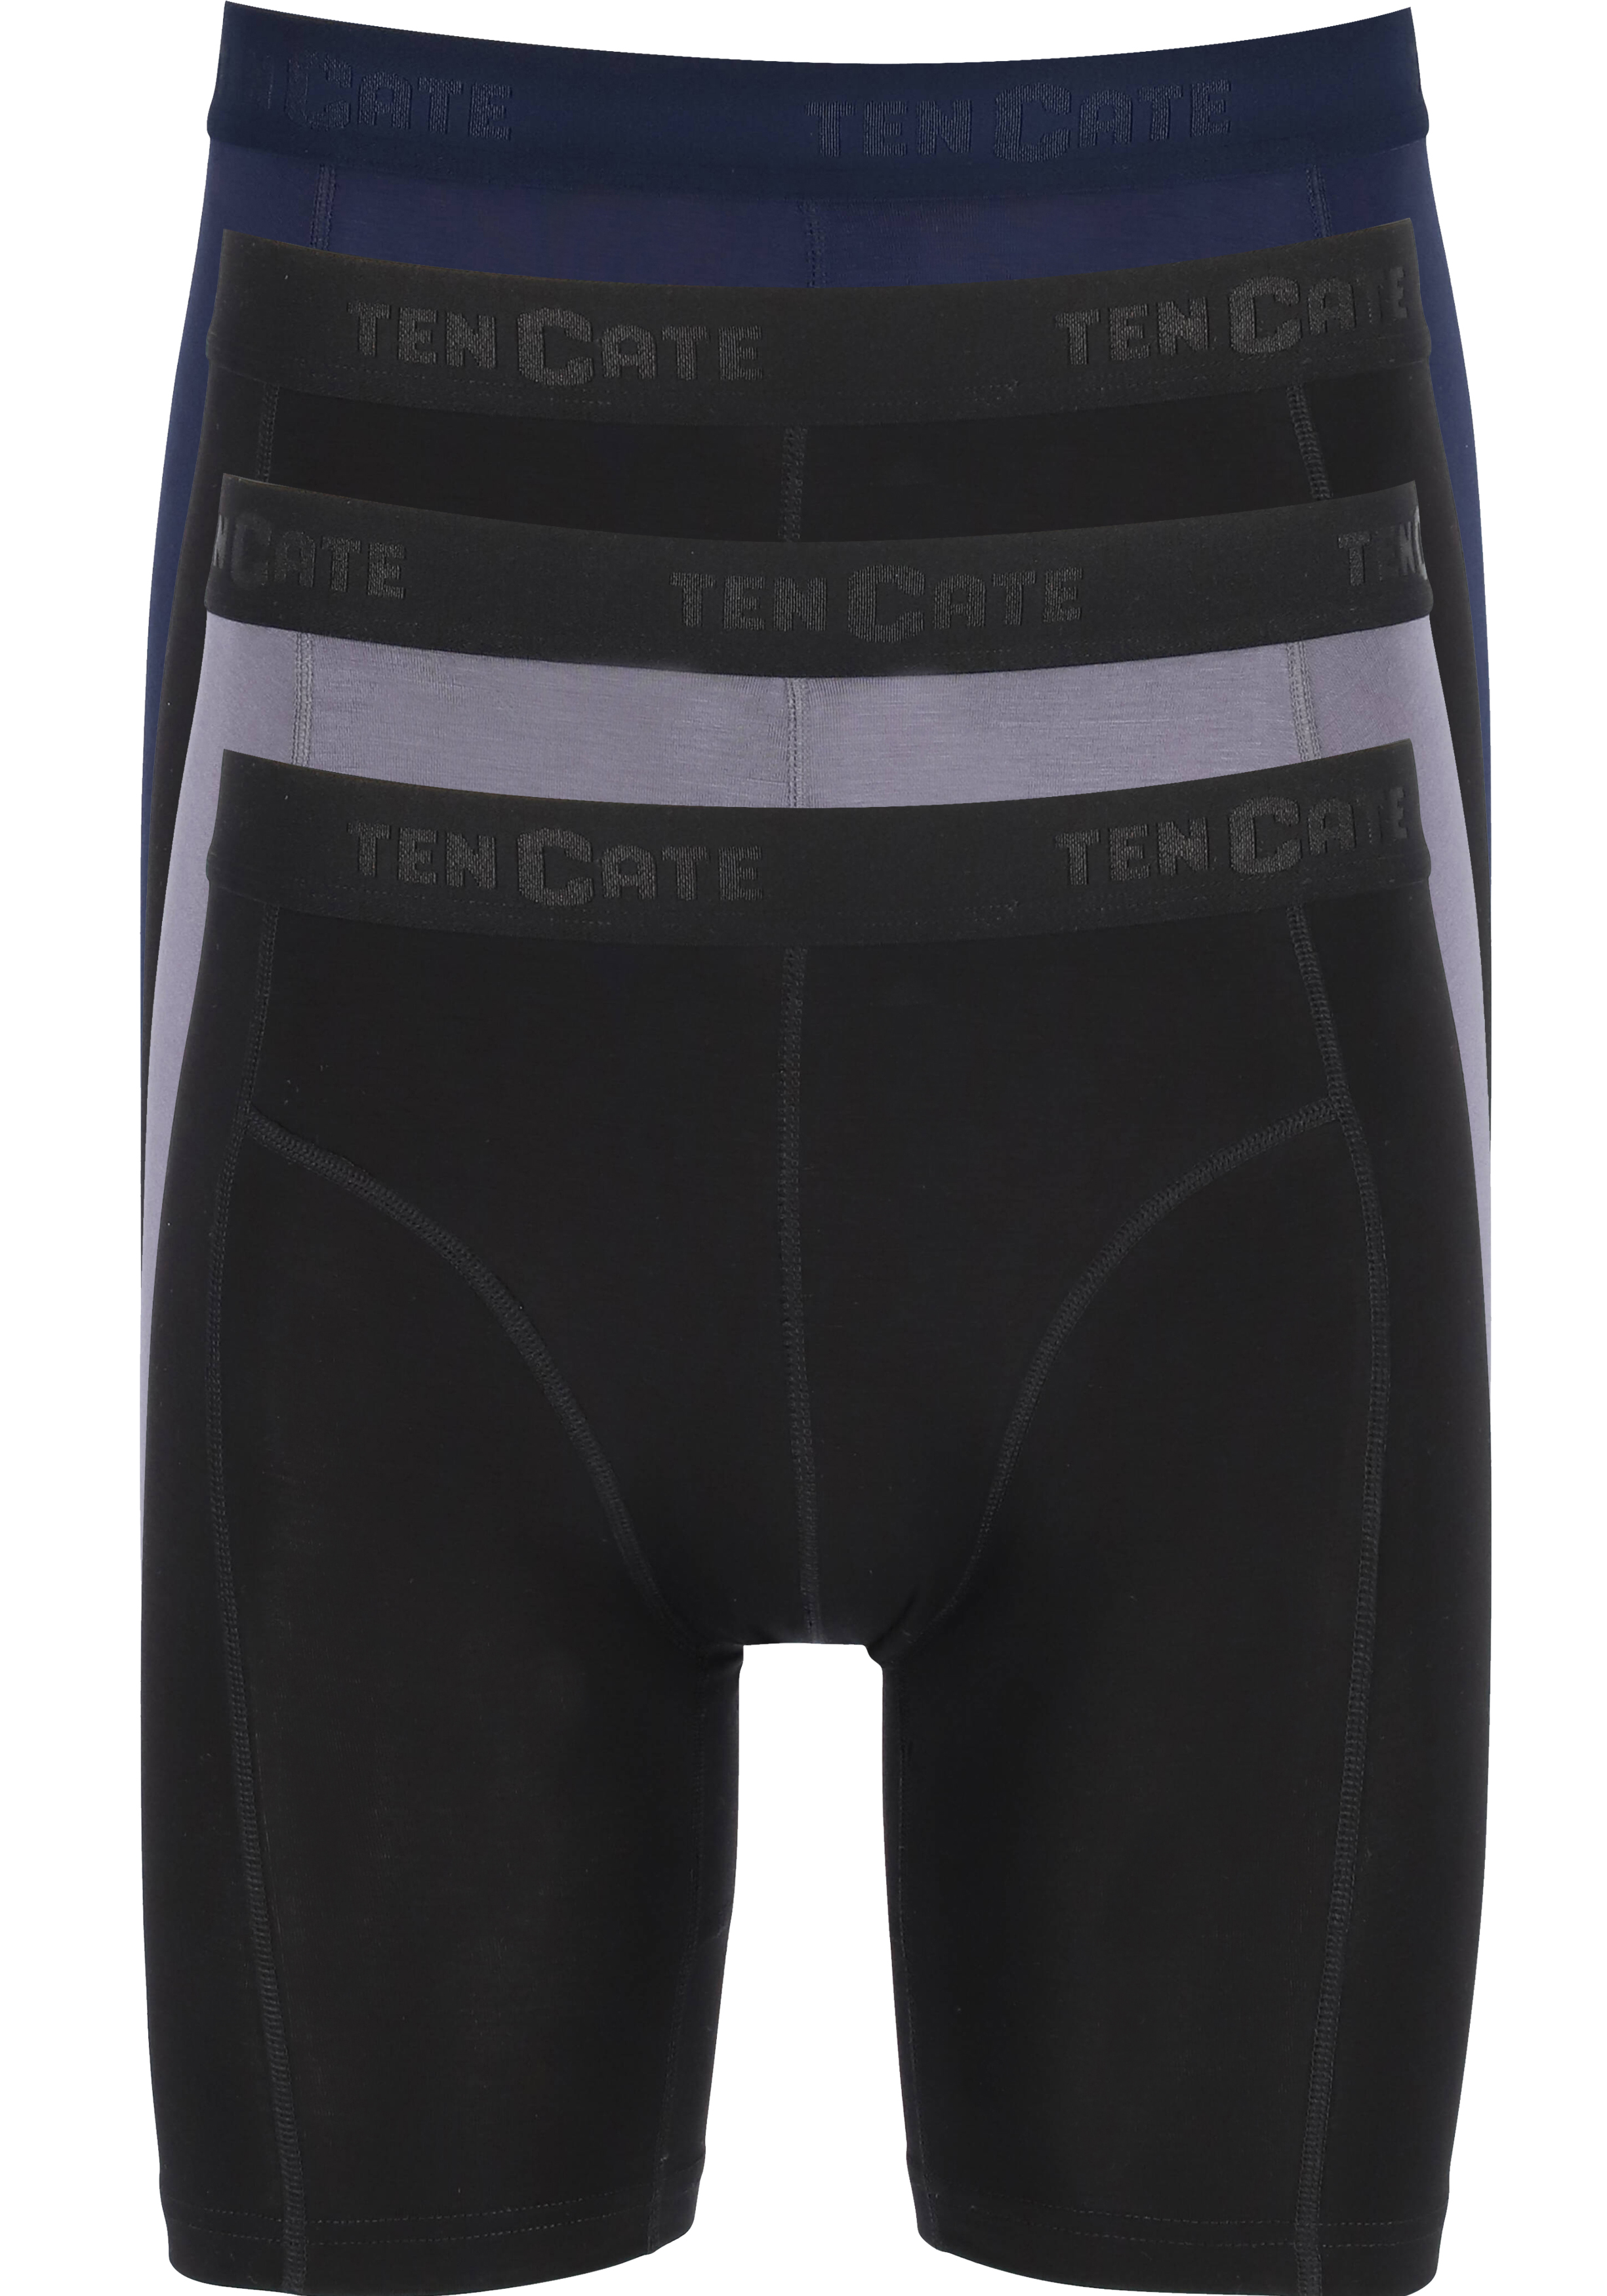 TEN CATE Basics men bamboo viscose long shorts (4-pack), heren boxers lange pijpen, multicolor